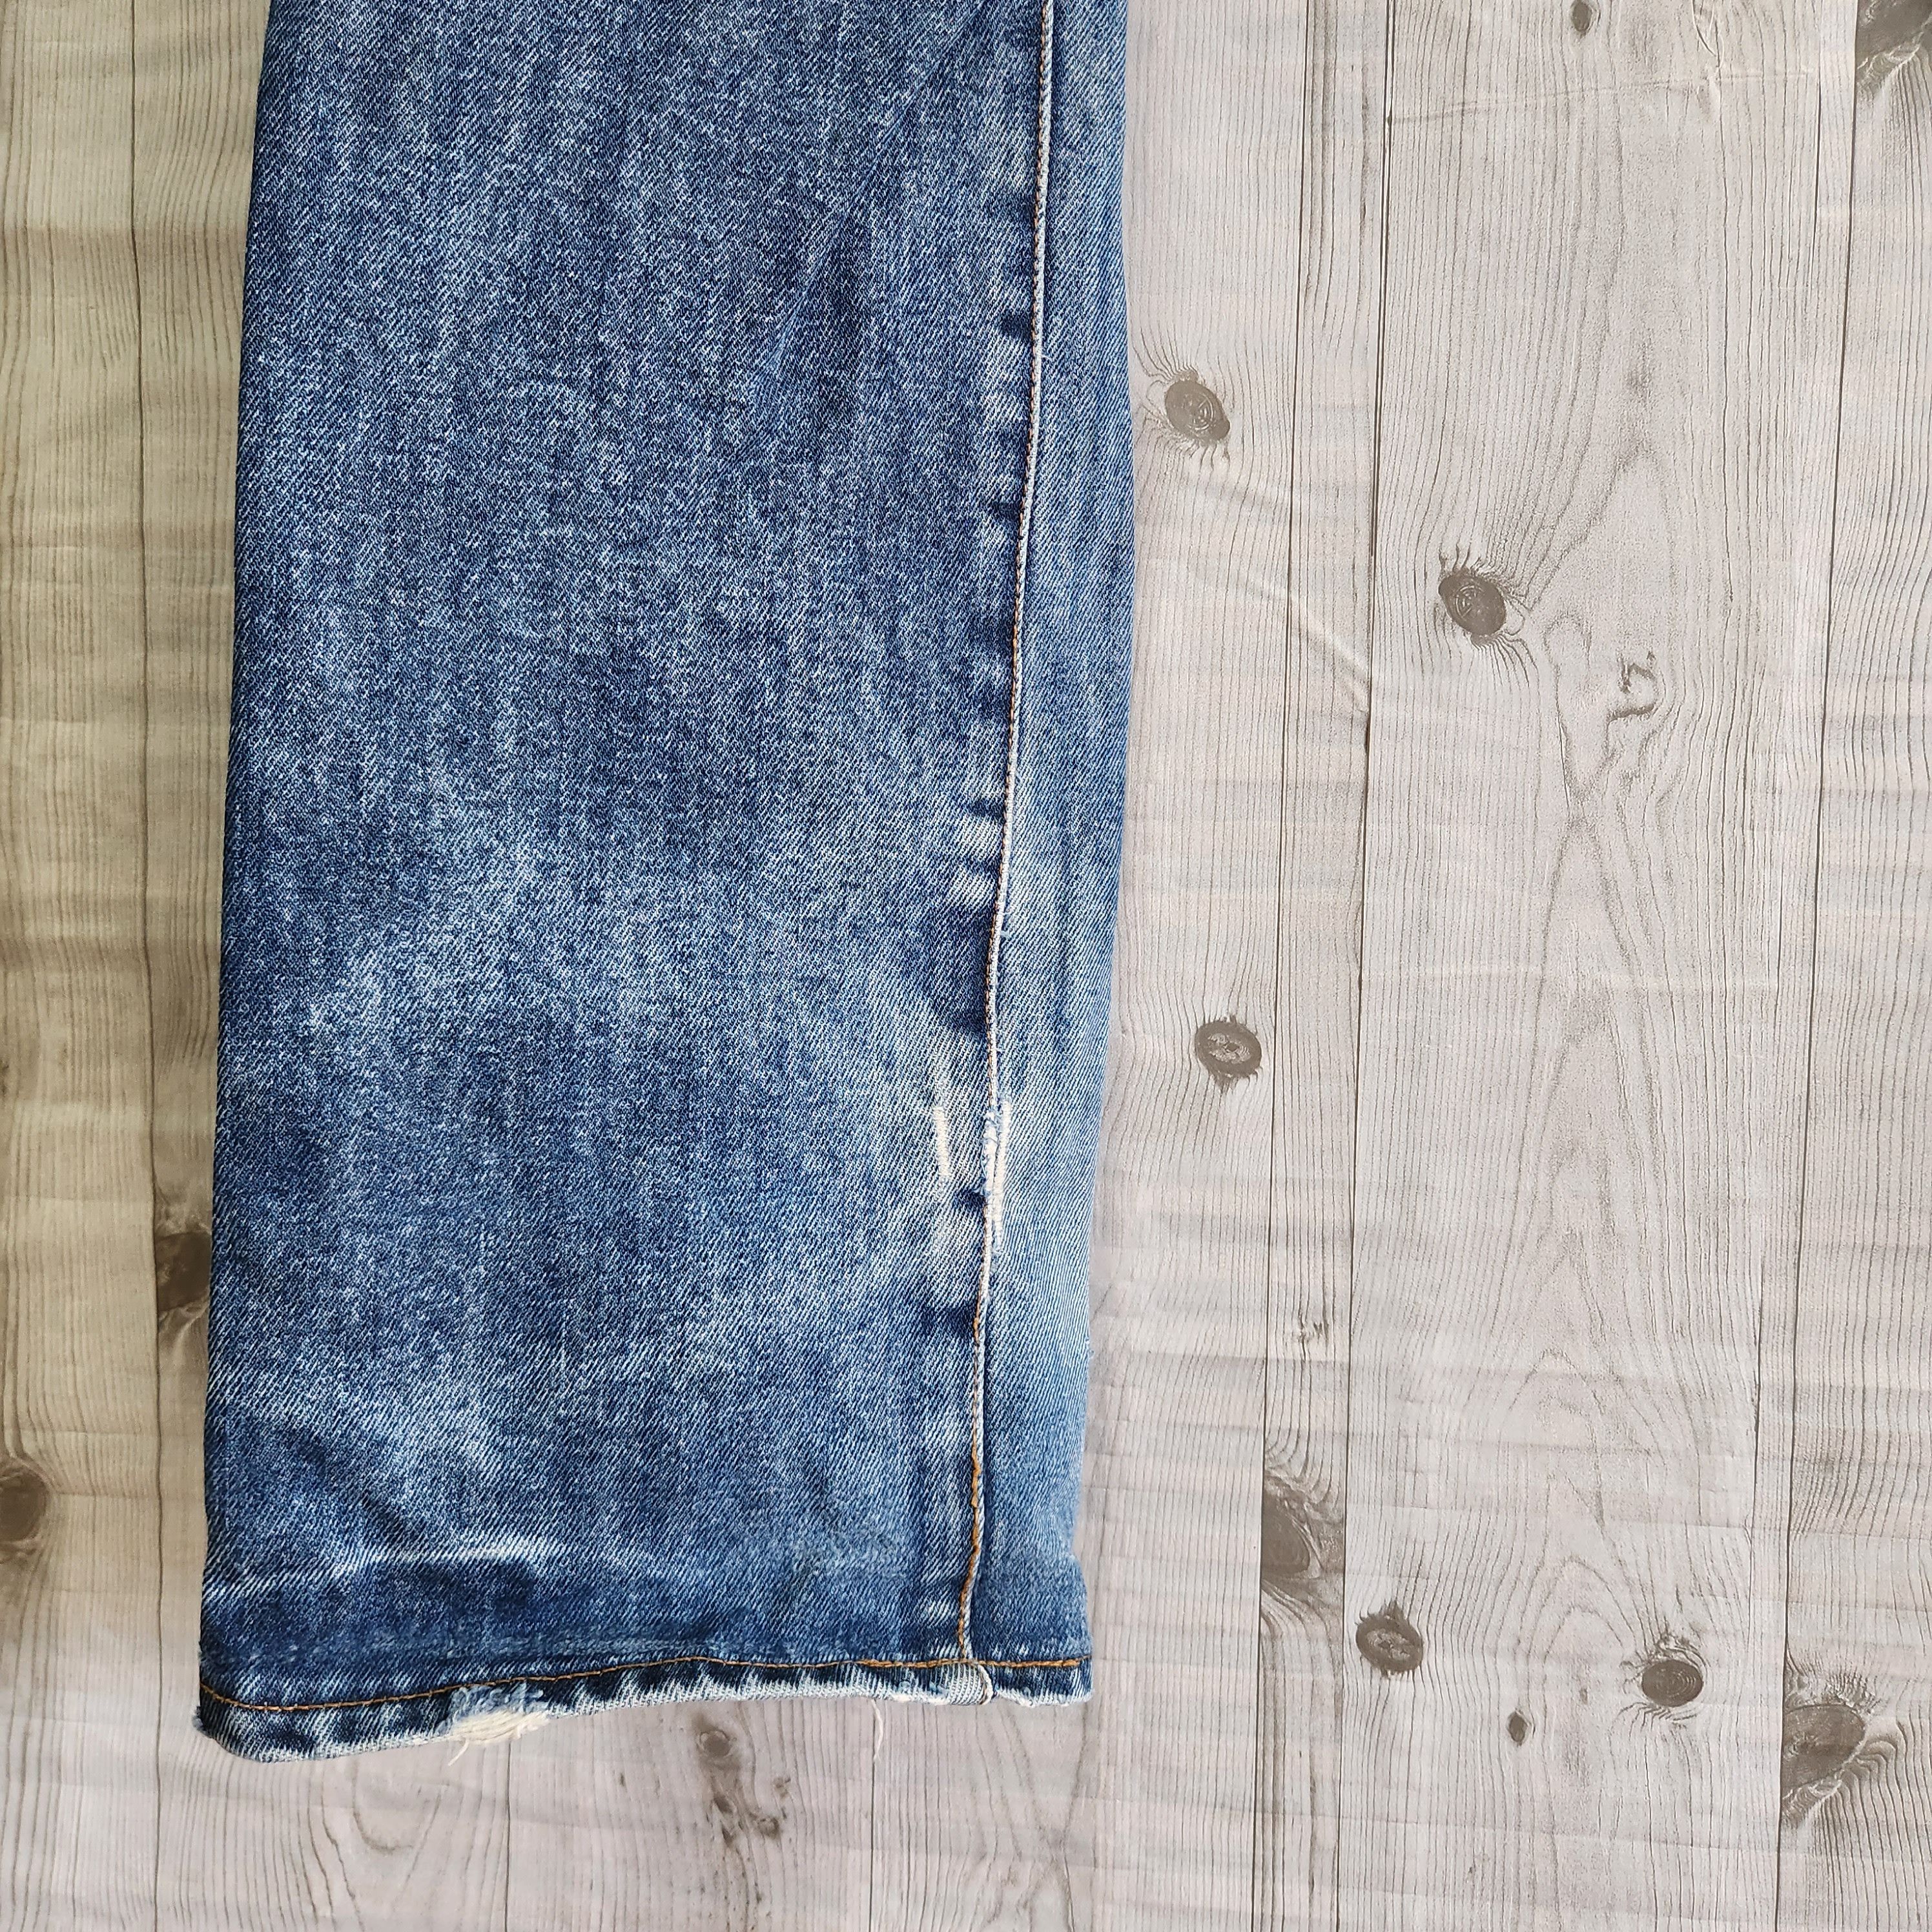 Japan Blue - Kojima Genes Japan Vintage Denim Blue Jeans Ripped - 15